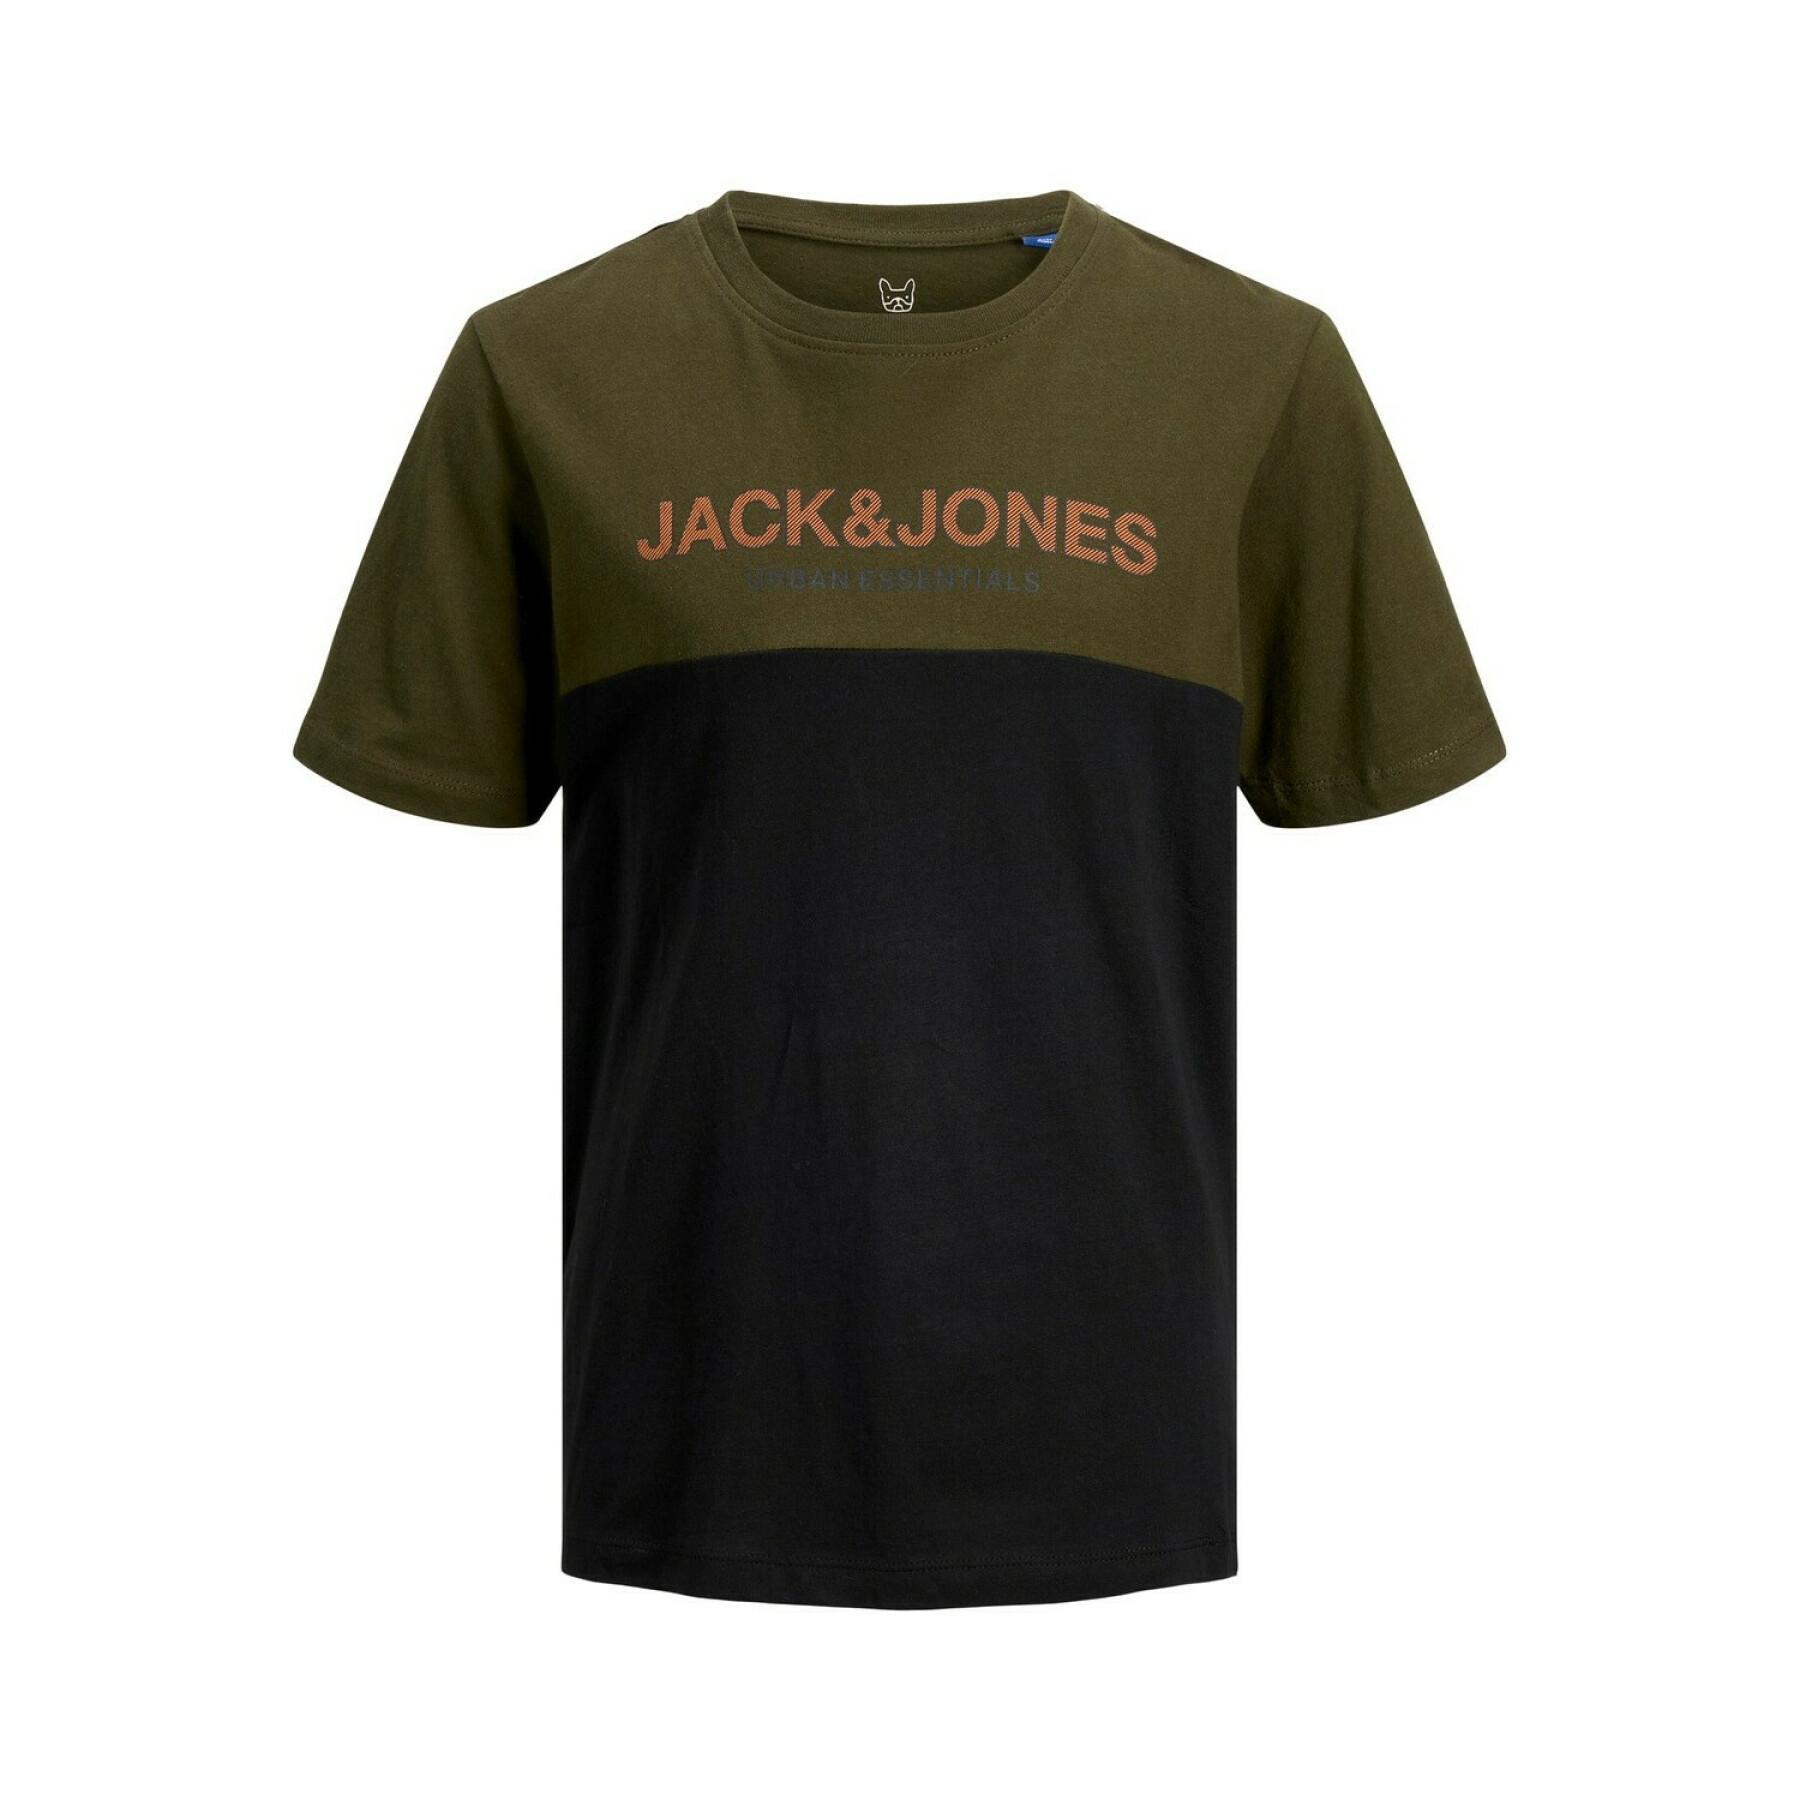 Kinder-T-Shirt Jack & Jones Urban